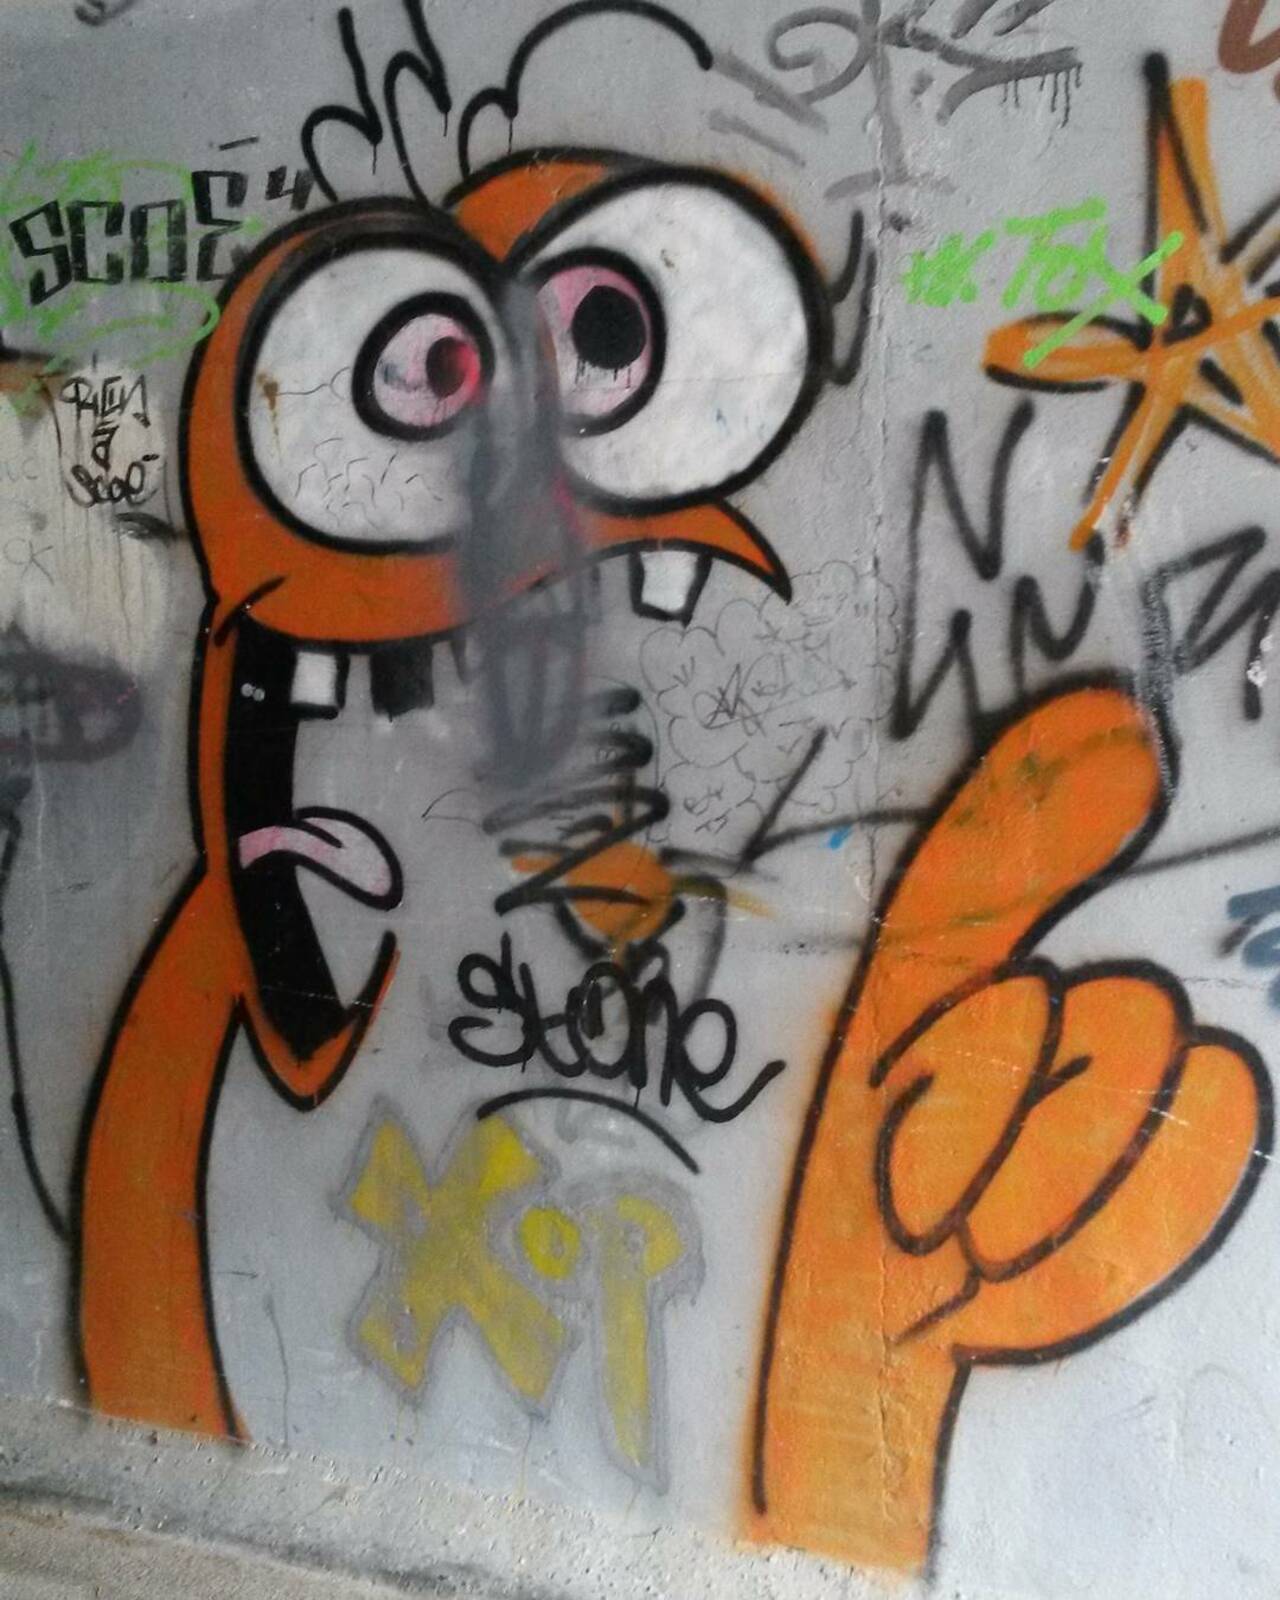 #Paris #graffiti photo by @le_cyclopede http://ift.tt/1OQyBu9 #StreetArt https://t.co/0cY6J2lSuz